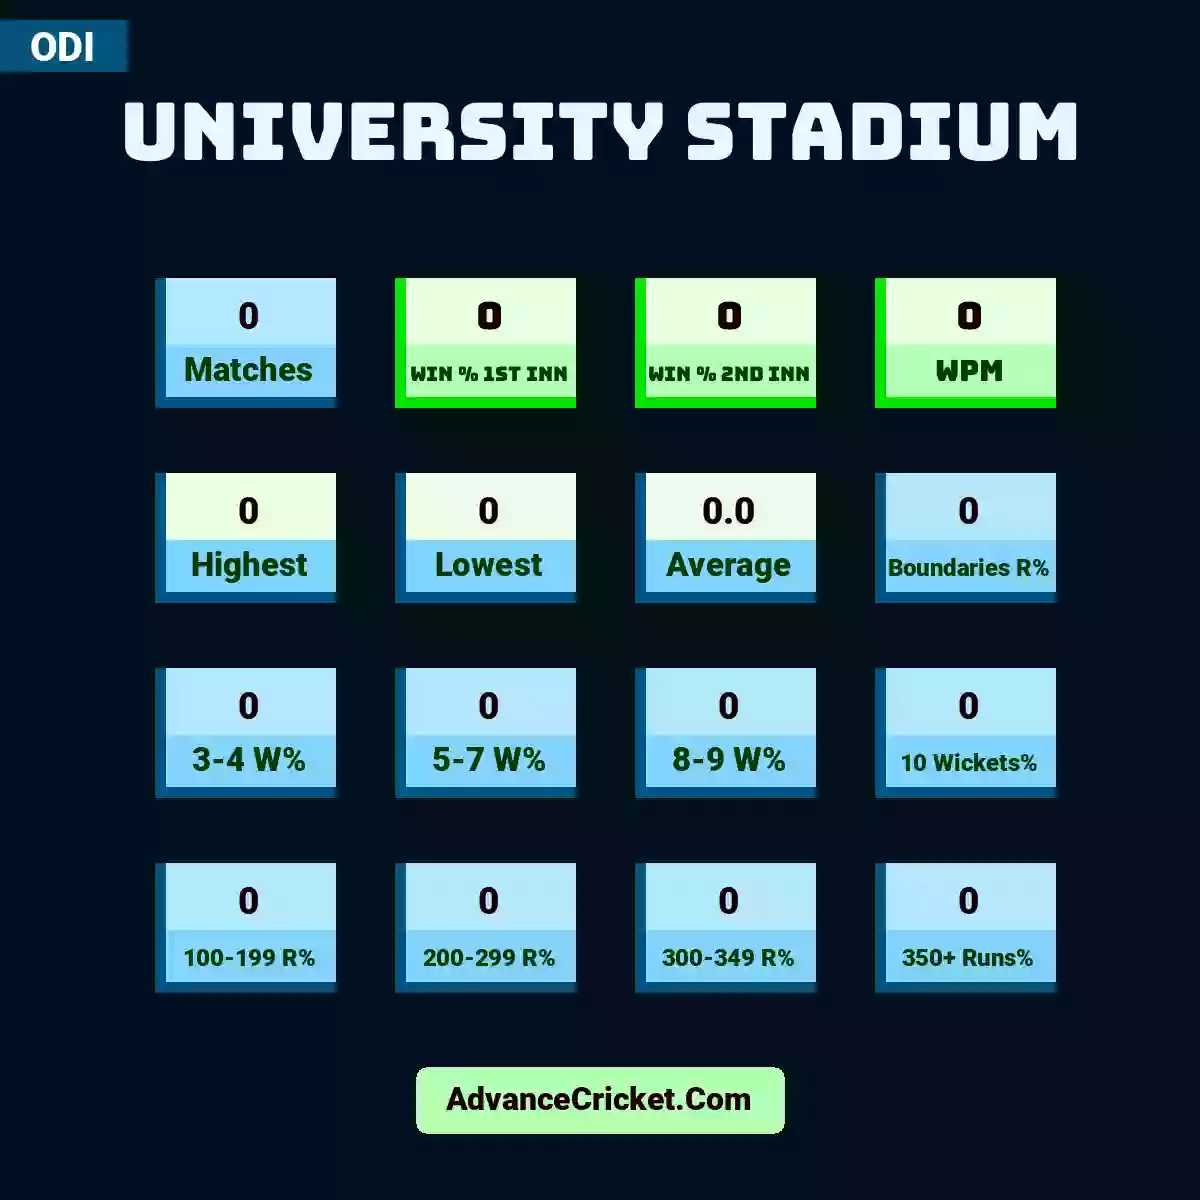 Image showing University Stadium with Matches: 0, Win % 1st Inn: 0, Win % 2nd Inn: 0, WPM: 0, Highest: 0, Lowest: 0, Average: 0.0, Boundaries R%: 0, 3-4 W%: 0, 5-7 W%: 0, 8-9 W%: 0, 10 Wickets%: 0, 100-199 R%: 0, 200-299 R%: 0, 300-349 R%: 0, 350+ Runs%: 0.